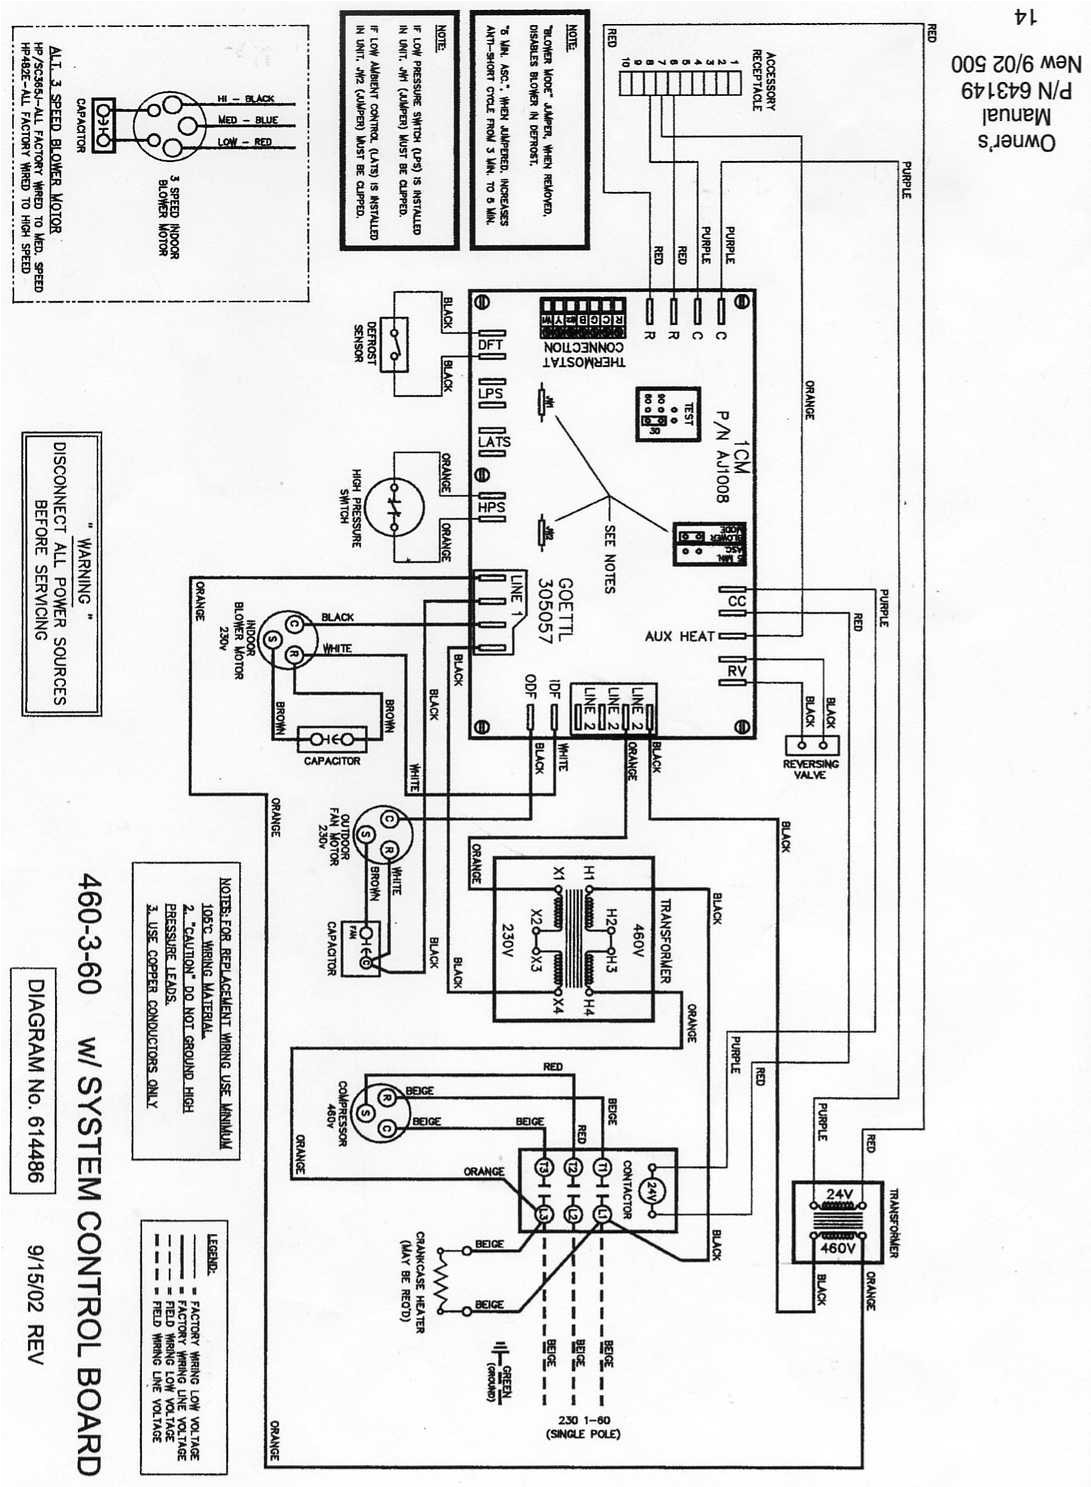 goettl wiring diagram wiring diagram user goettl heat pump wiring diagram goettl heat pump wiring diagram